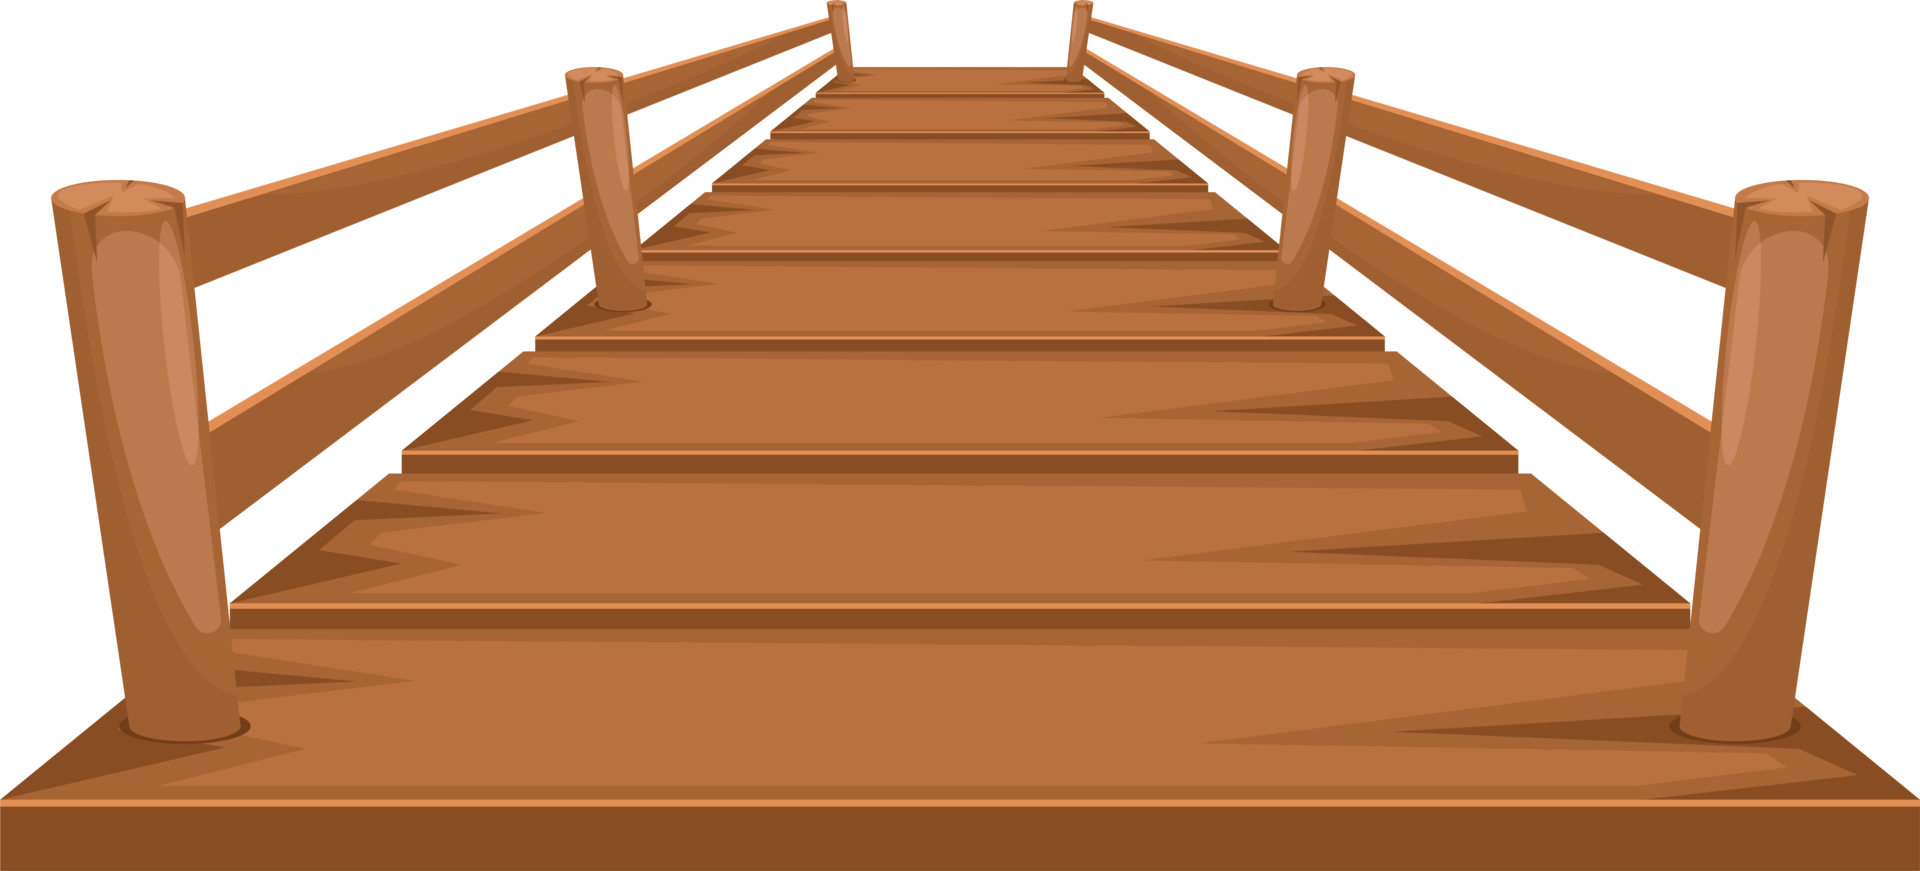 Wooden bridge clipart design illustration png